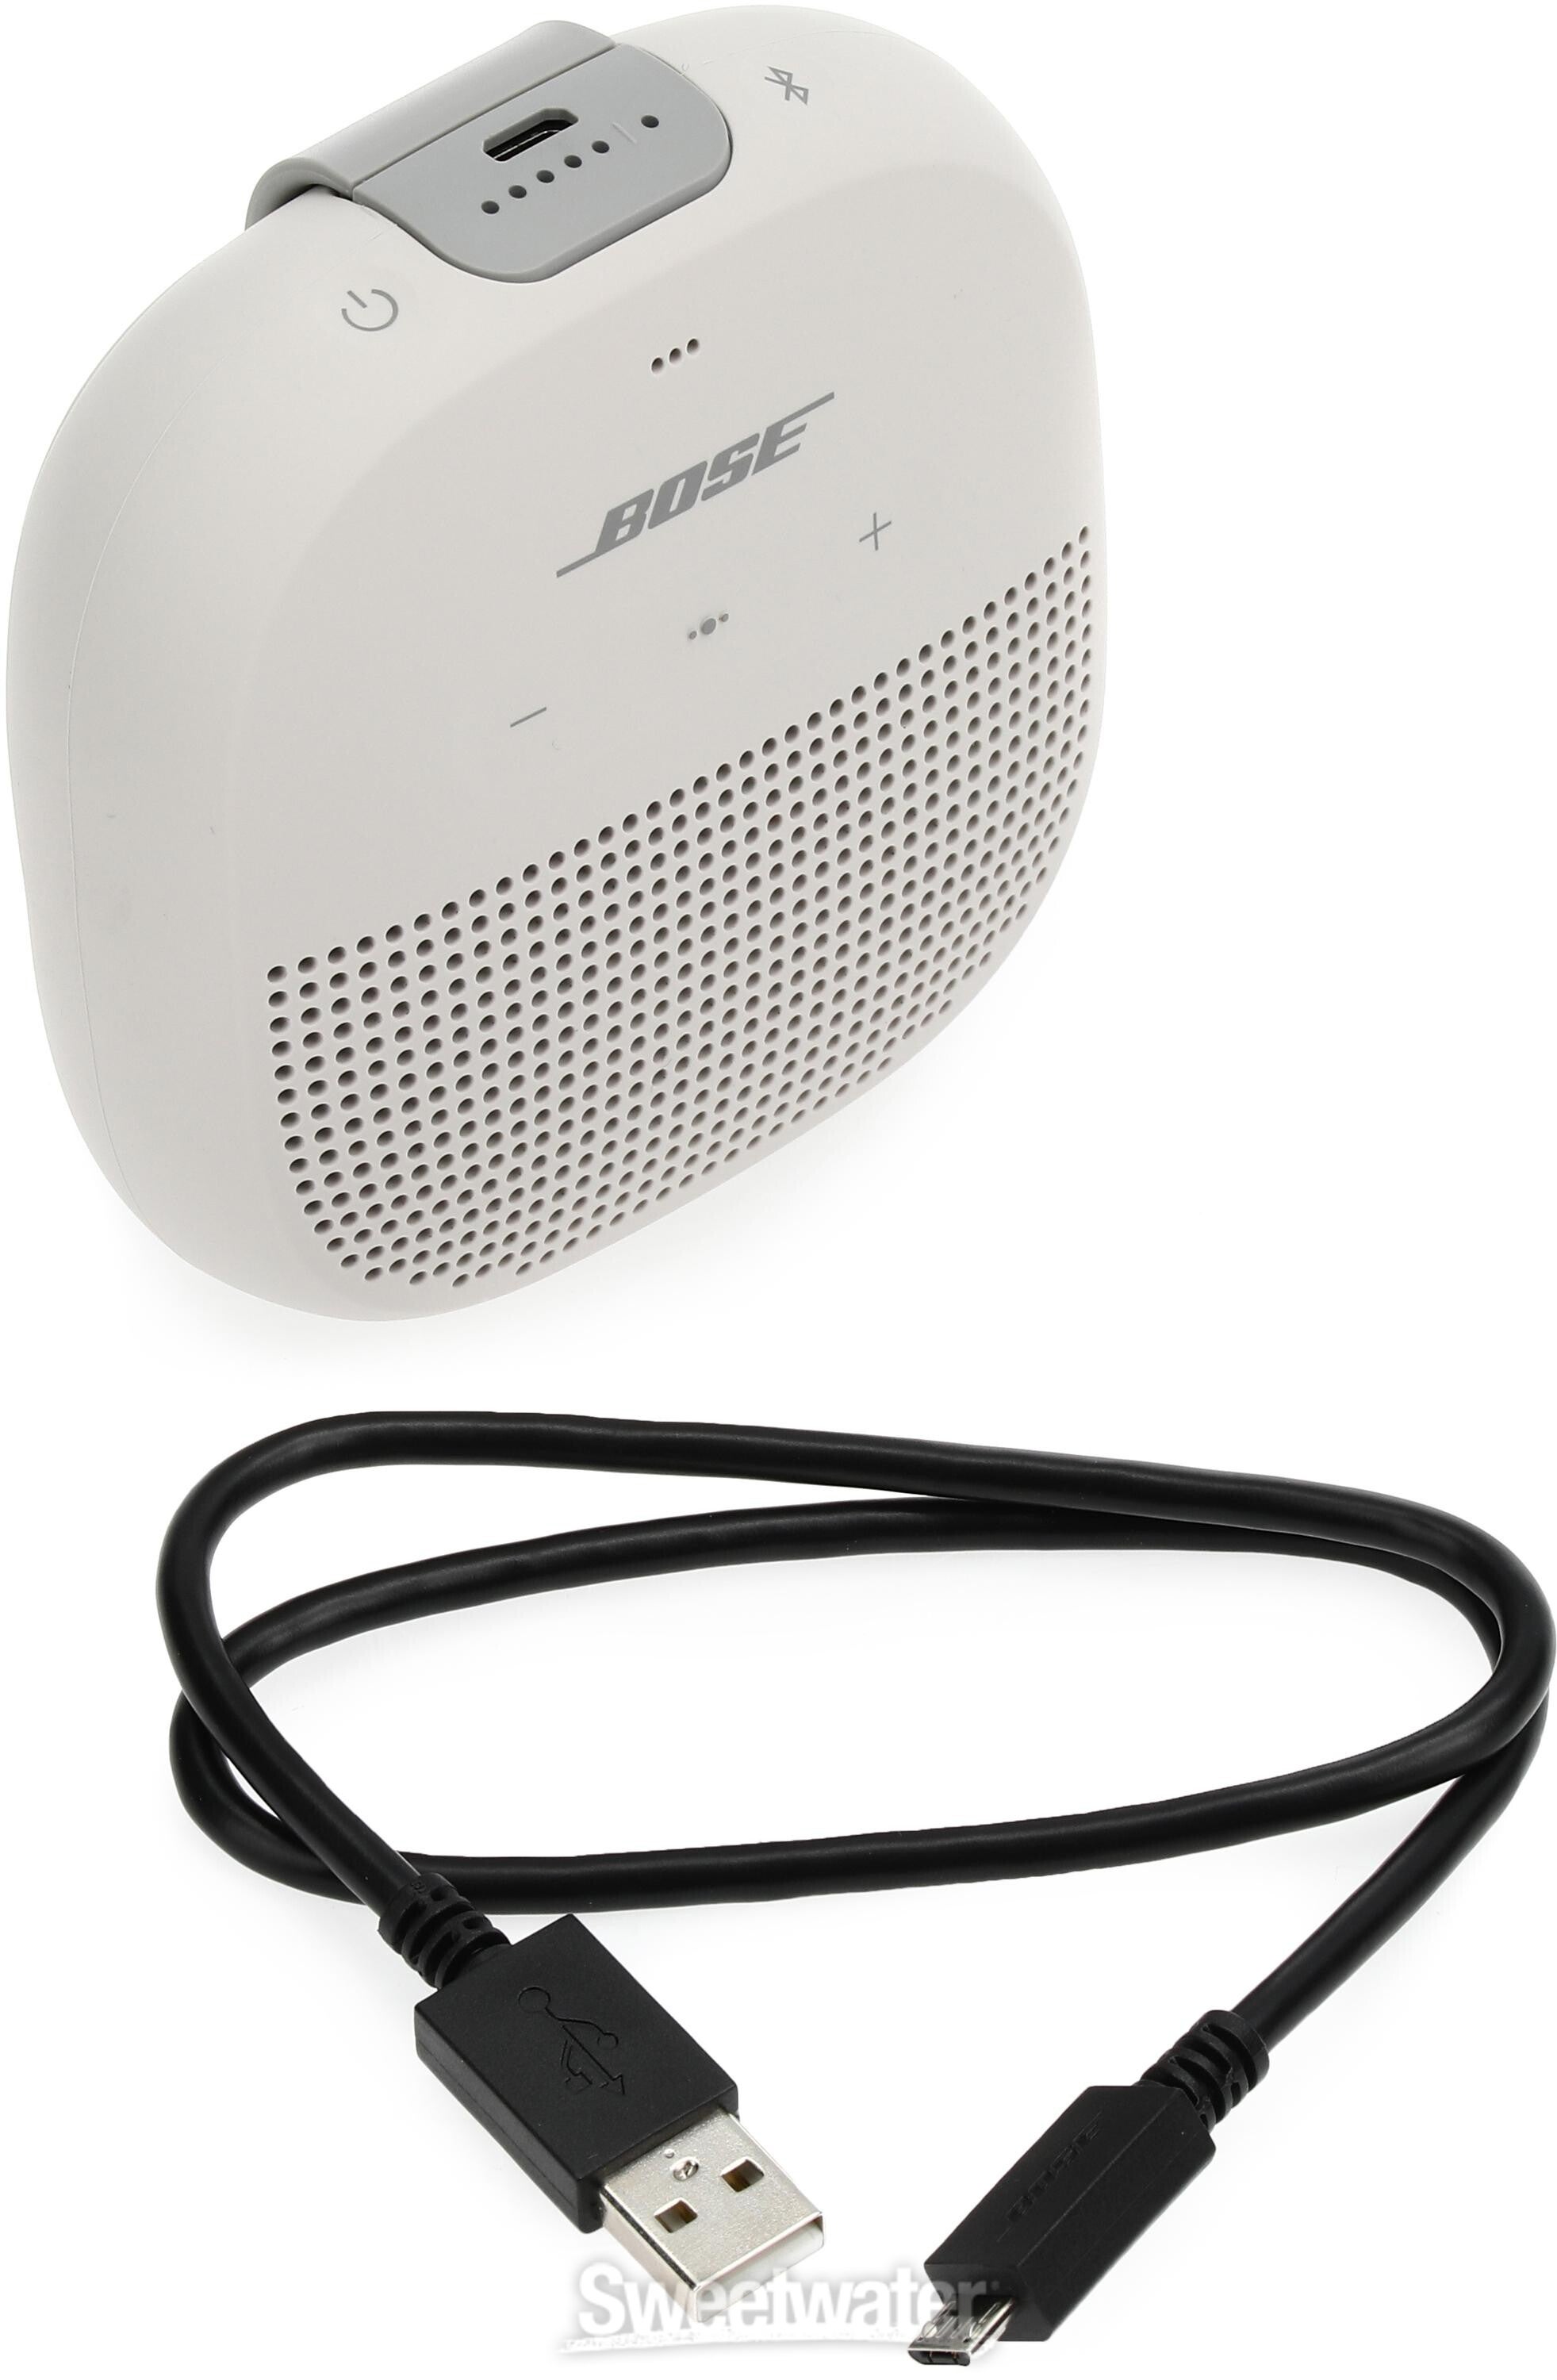 Bose SoundLink Micro Bluetooth Speaker - White Smoke